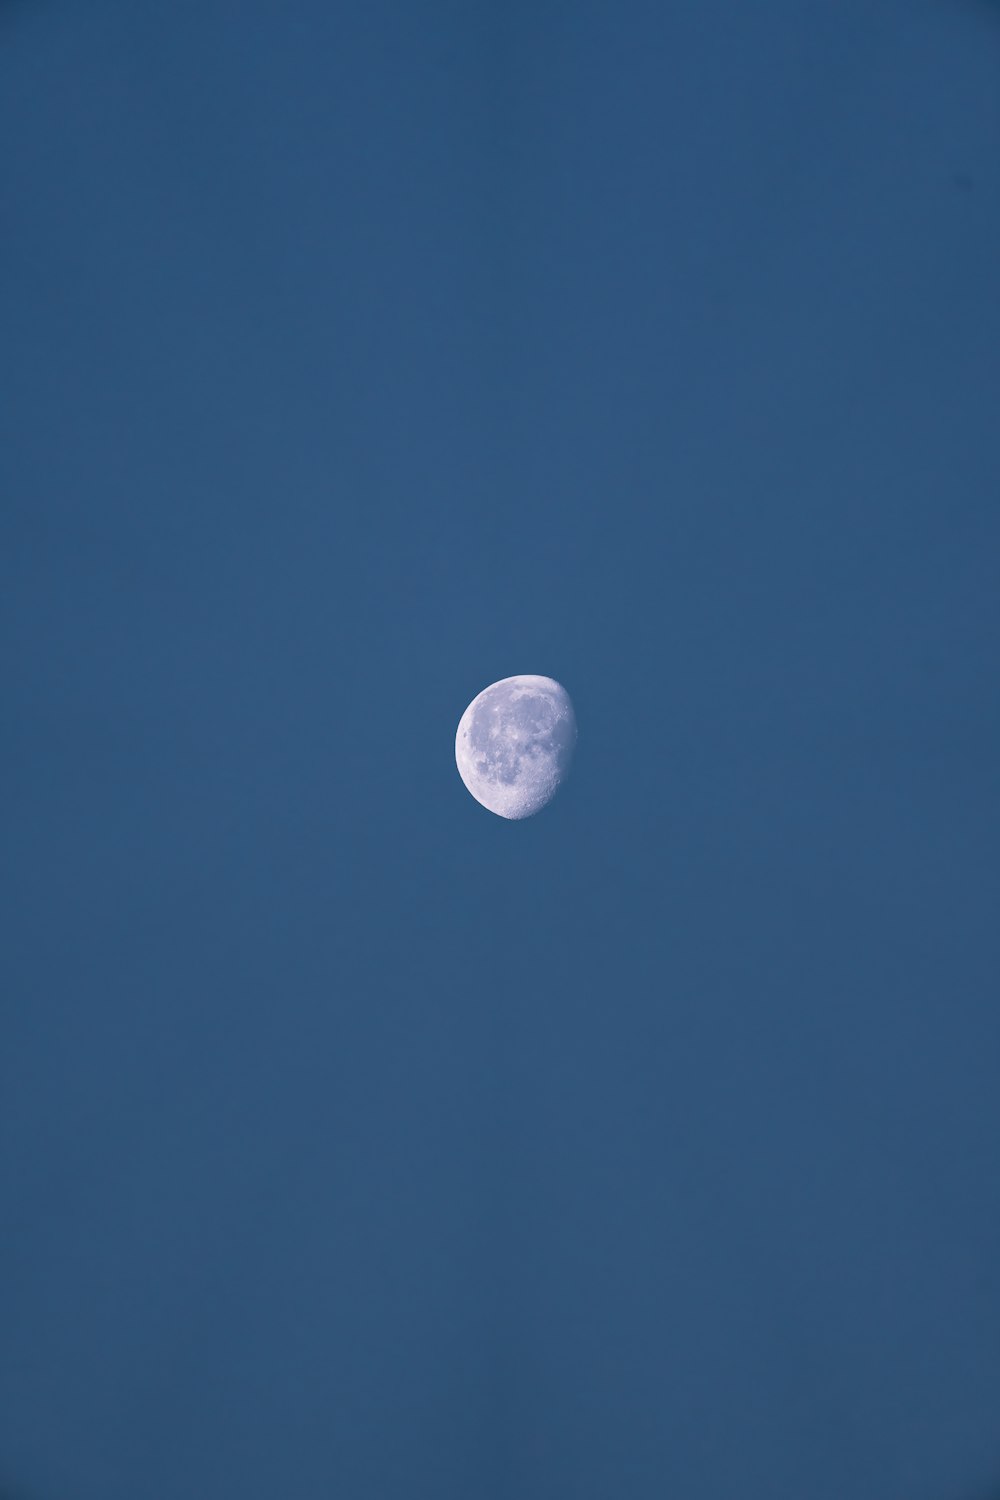 a full moon in a clear blue sky